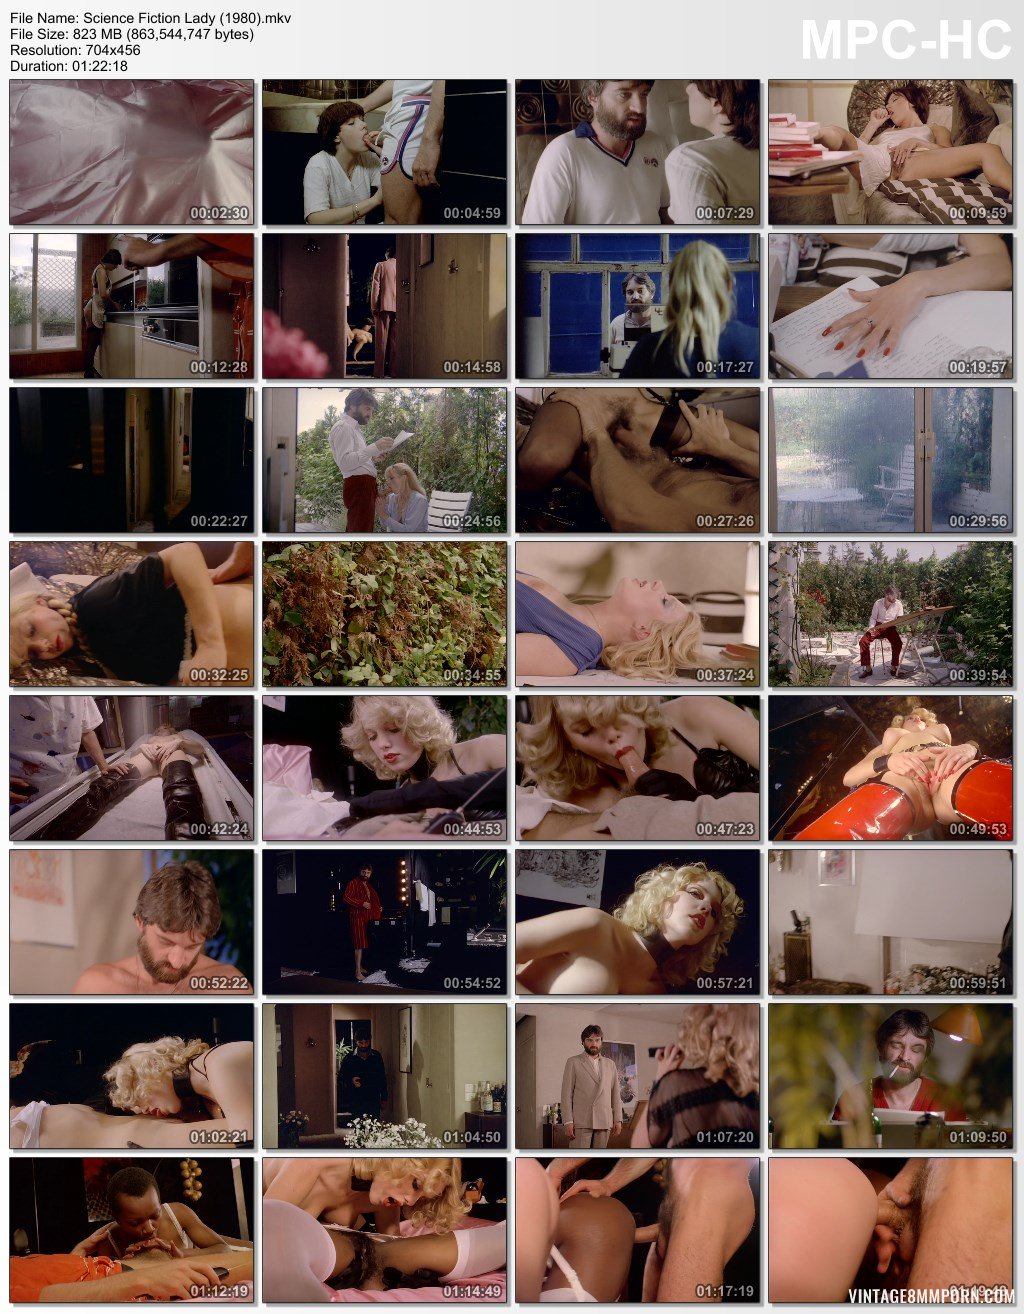 Vintage Science Porn - Science Fiction Lady (1980) Â» Vintage 8mm Porn, 8mm Sex Films, Classic Porn,  Stag Movies, Glamour Films, Silent loops, Reel Porn